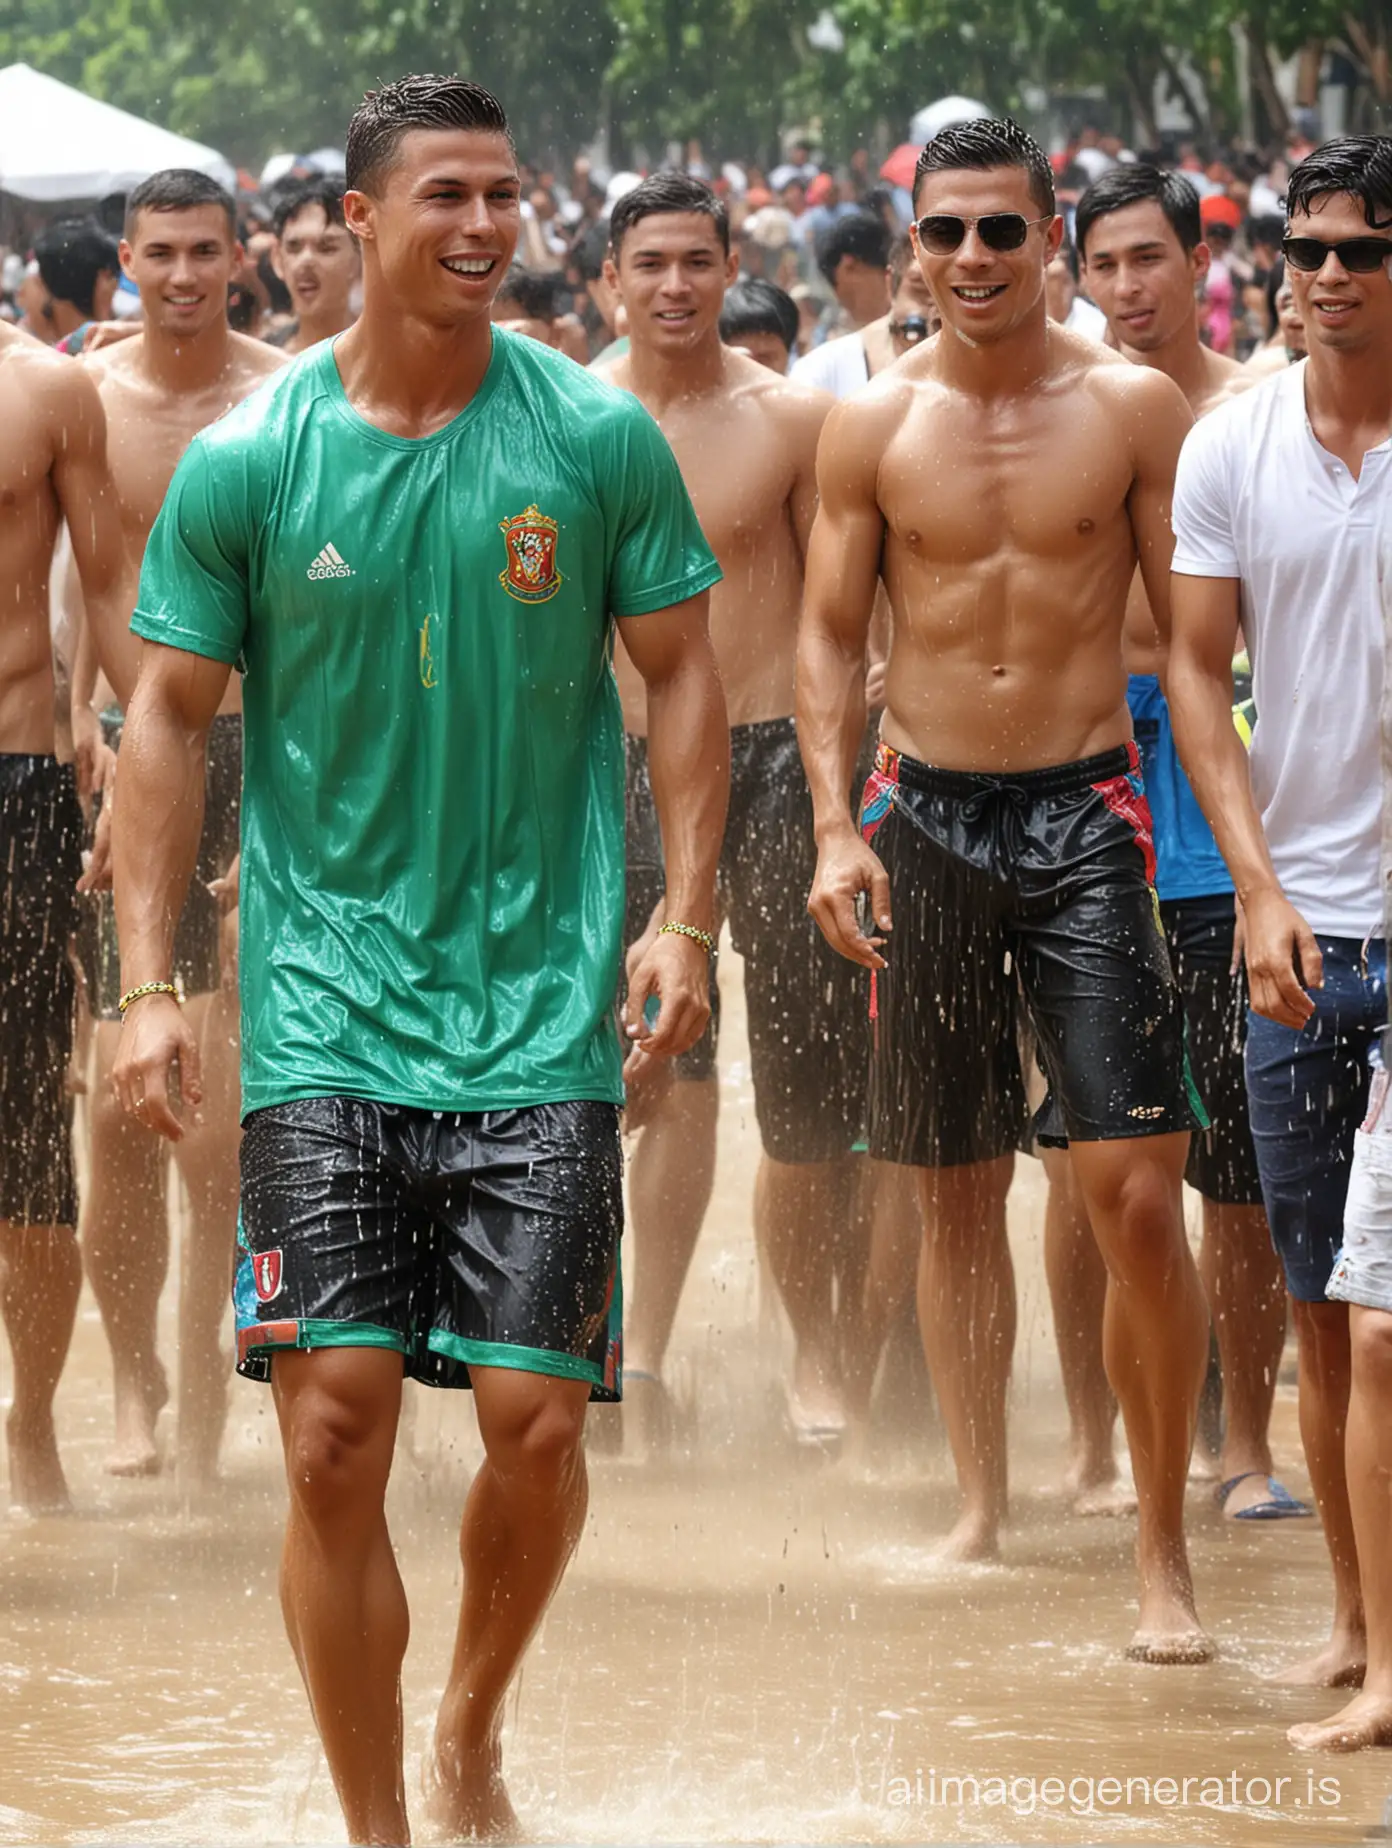 Christiano-Ronaldo-Celebrates-Songkran-Festival-in-Thailand-with-Water-Splashing